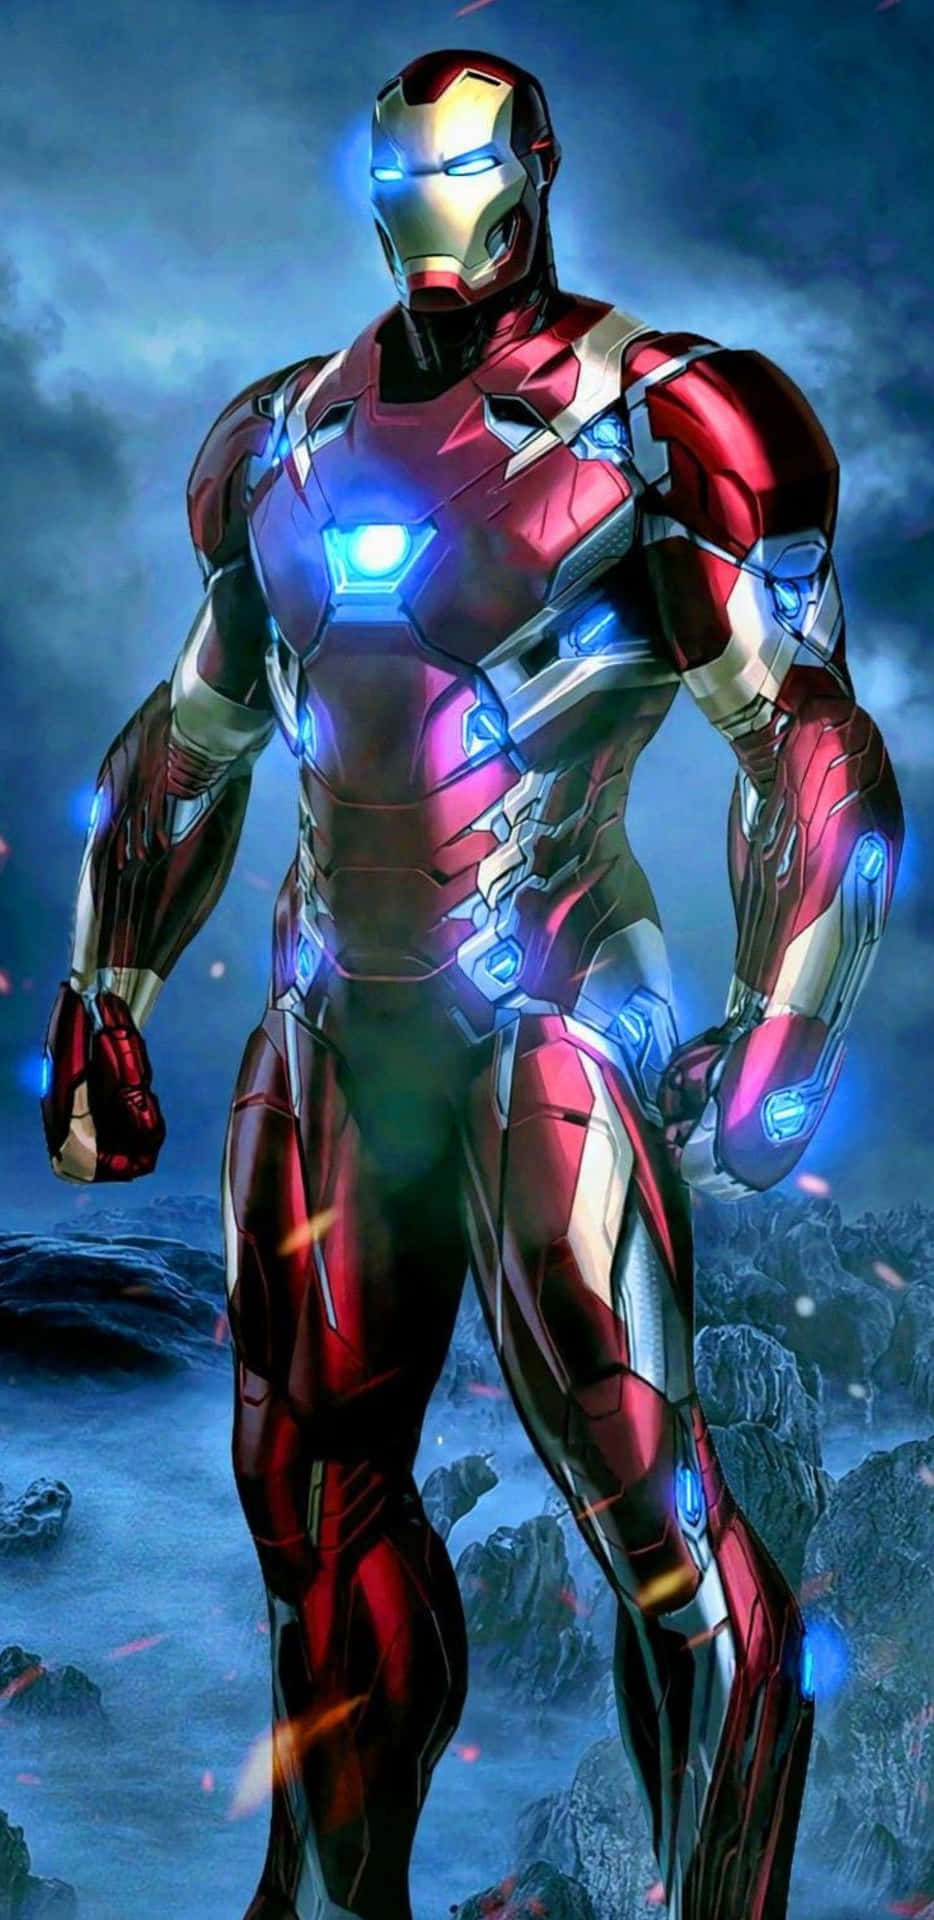 Pixel3xl Bakgrund Med Iron Man Mark 46 Dräkten.